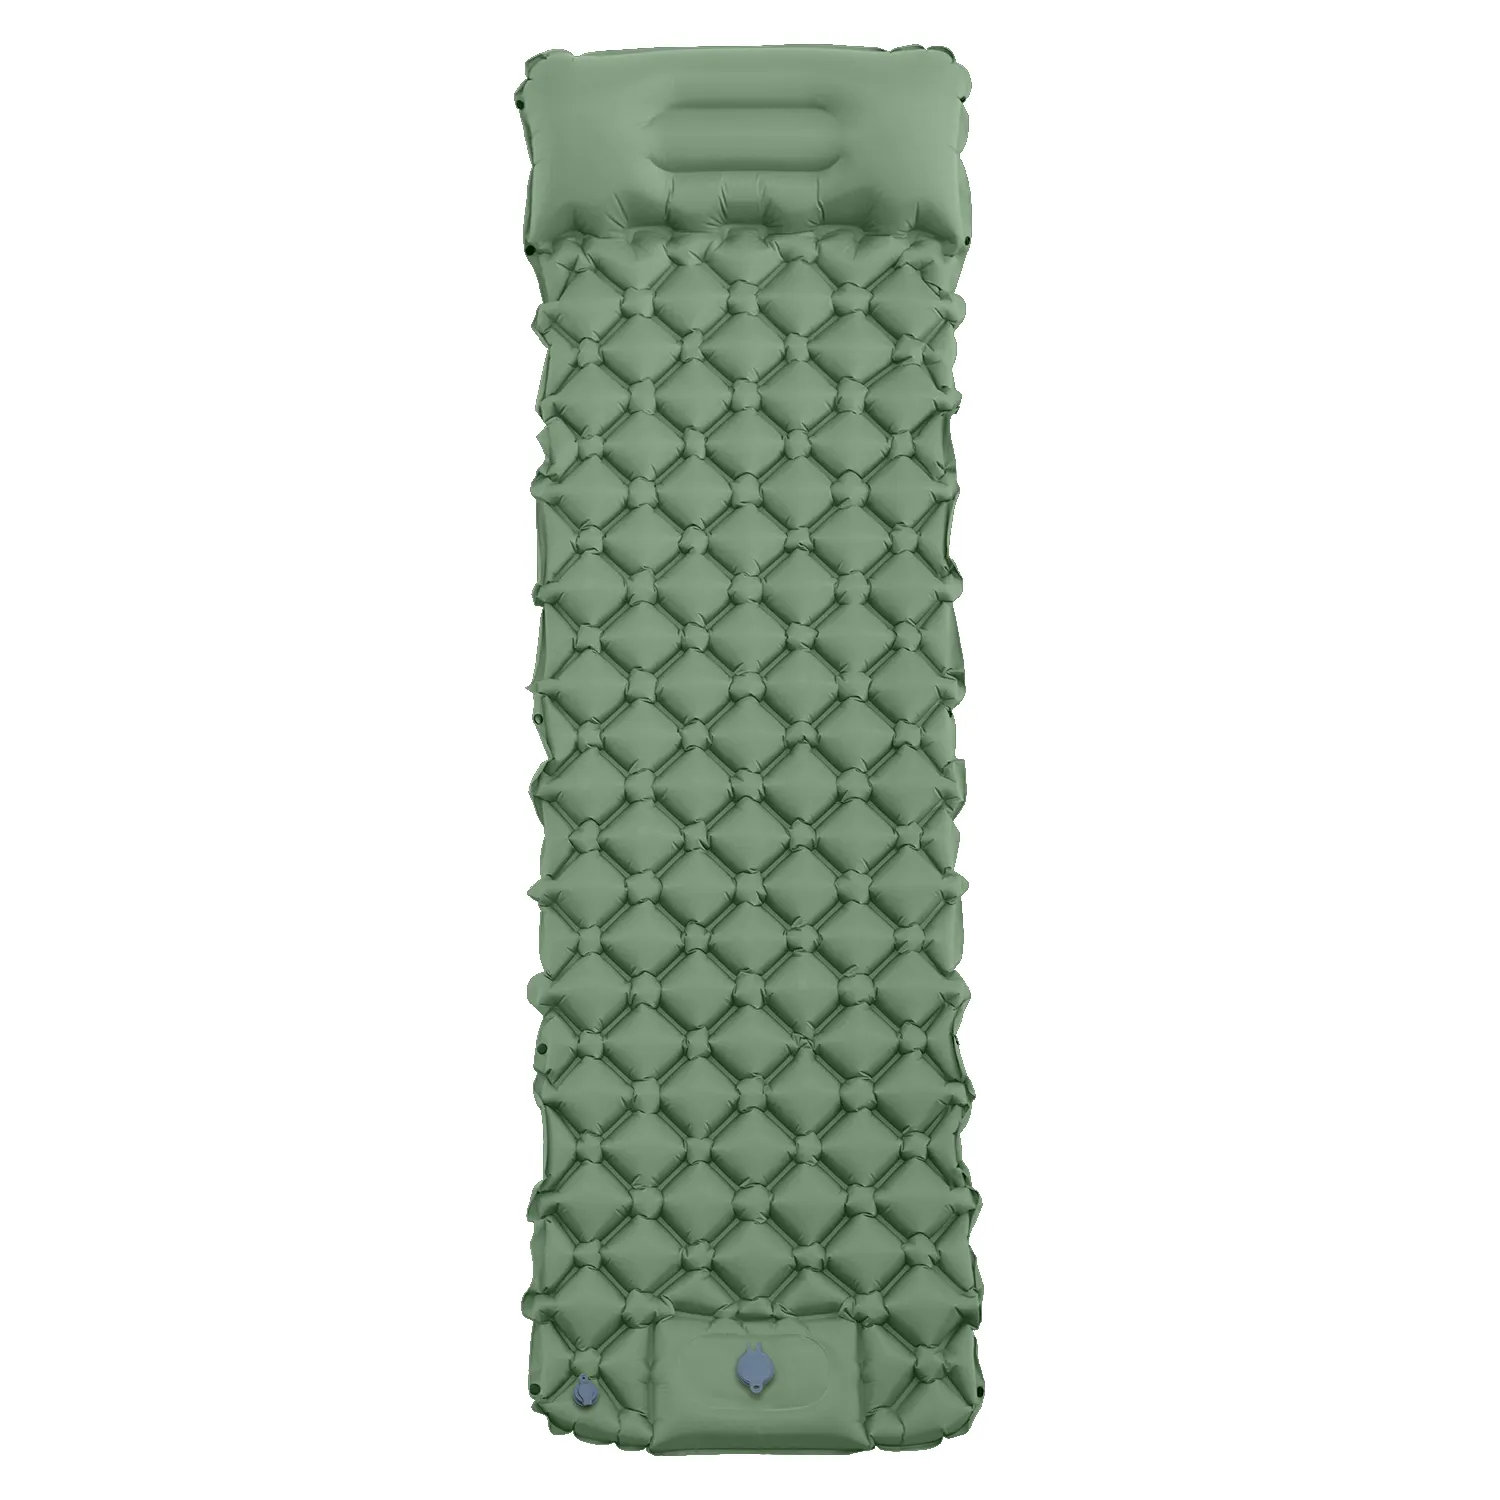 Compact Ultralight Tpu Inflatable Camping Sleeping Pad With Built-in Foot Pump Air Mattress Camping Sleeping Mat